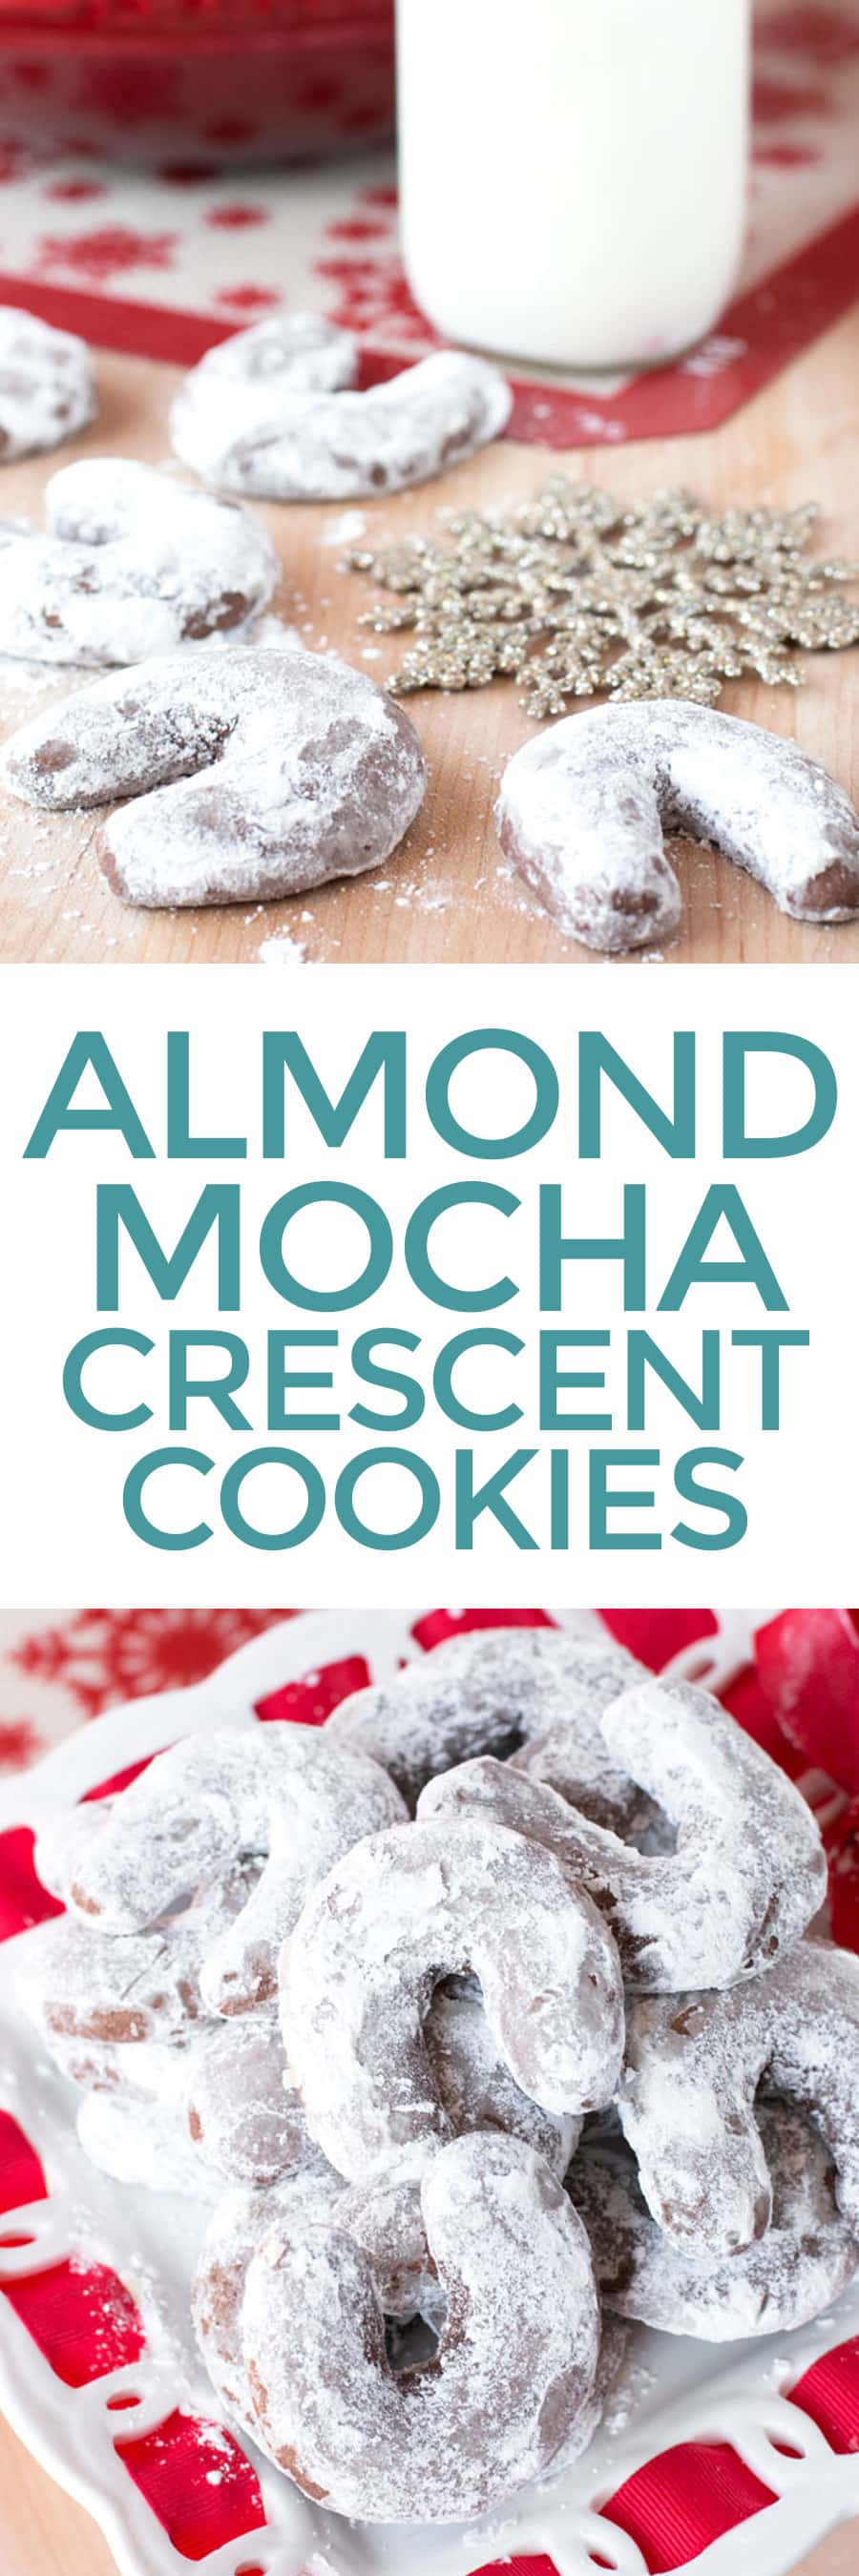 Almond Mocha Crescent Cookies + a Le Creuset/Silpat Baking Giveaway ...